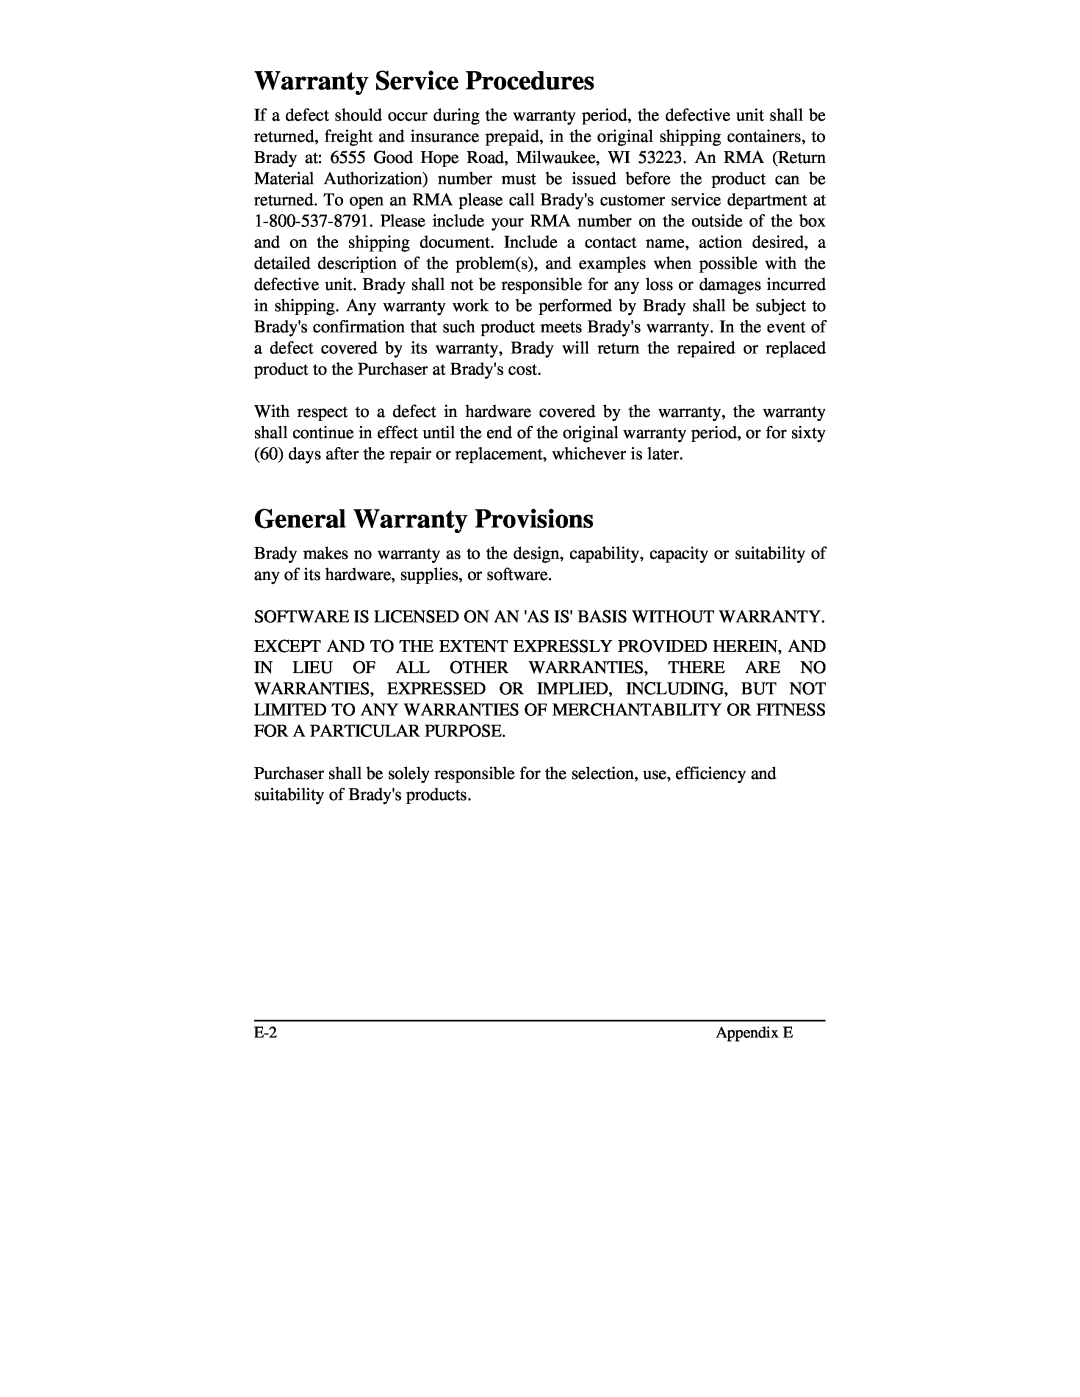 Brady 2024, 2034 manual Warranty Service Procedures, General Warranty Provisions 